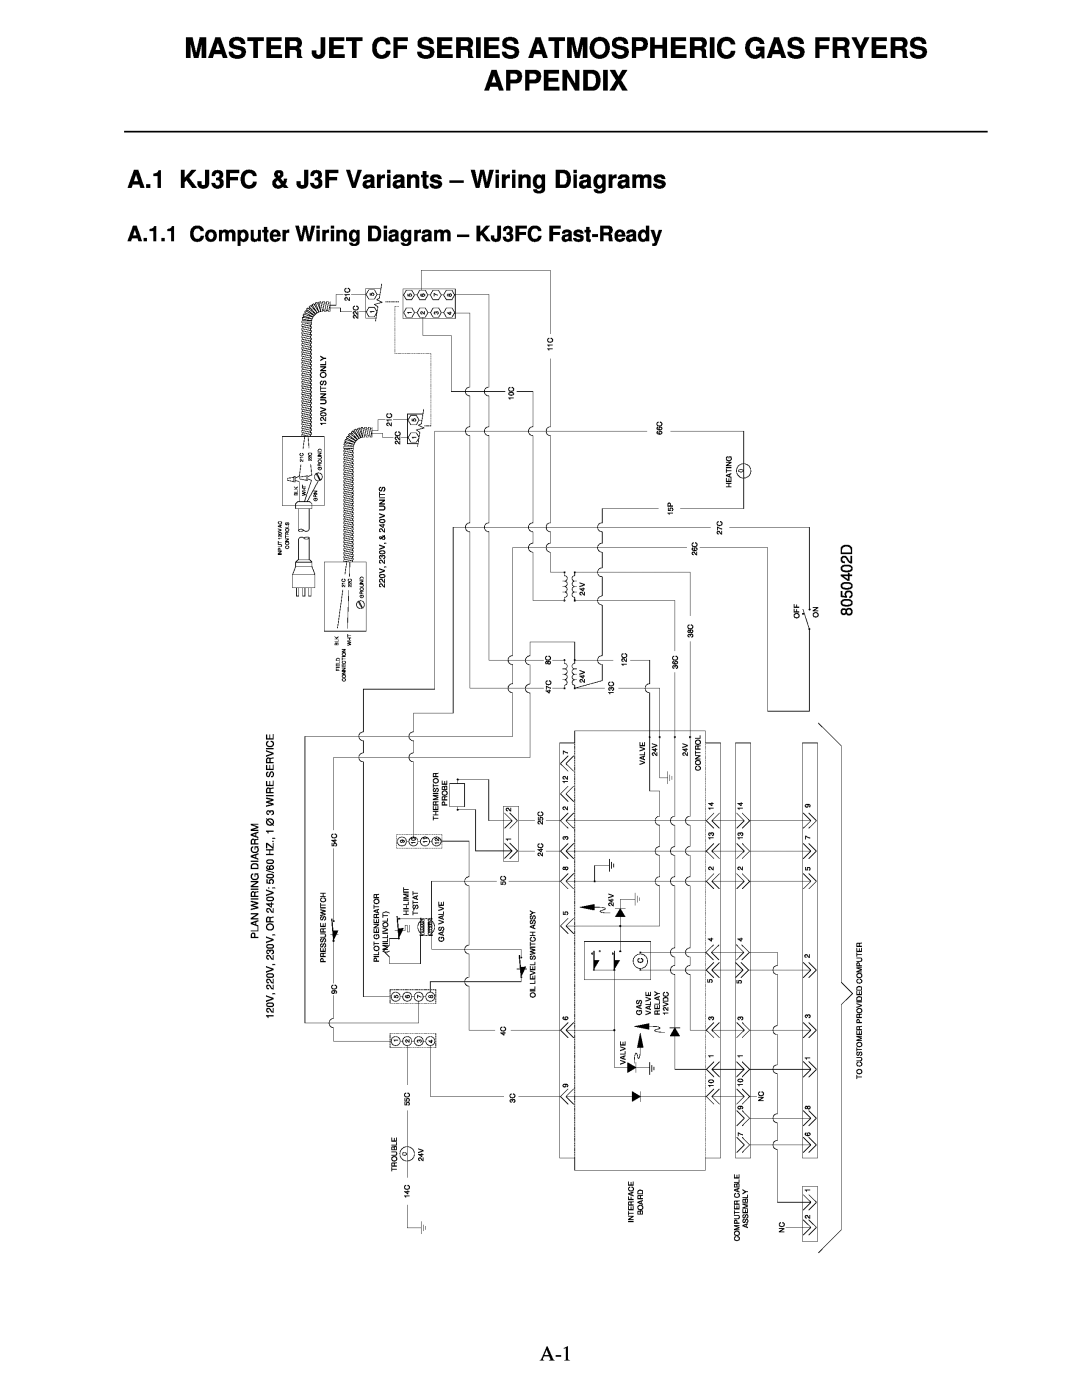 Frymaster Master Jet Cf Series Atmospheric Gas Fryers Appendix, Wiring Diagrams, A.1.1, KJ3FC Fast-Ready, J3F Variants 